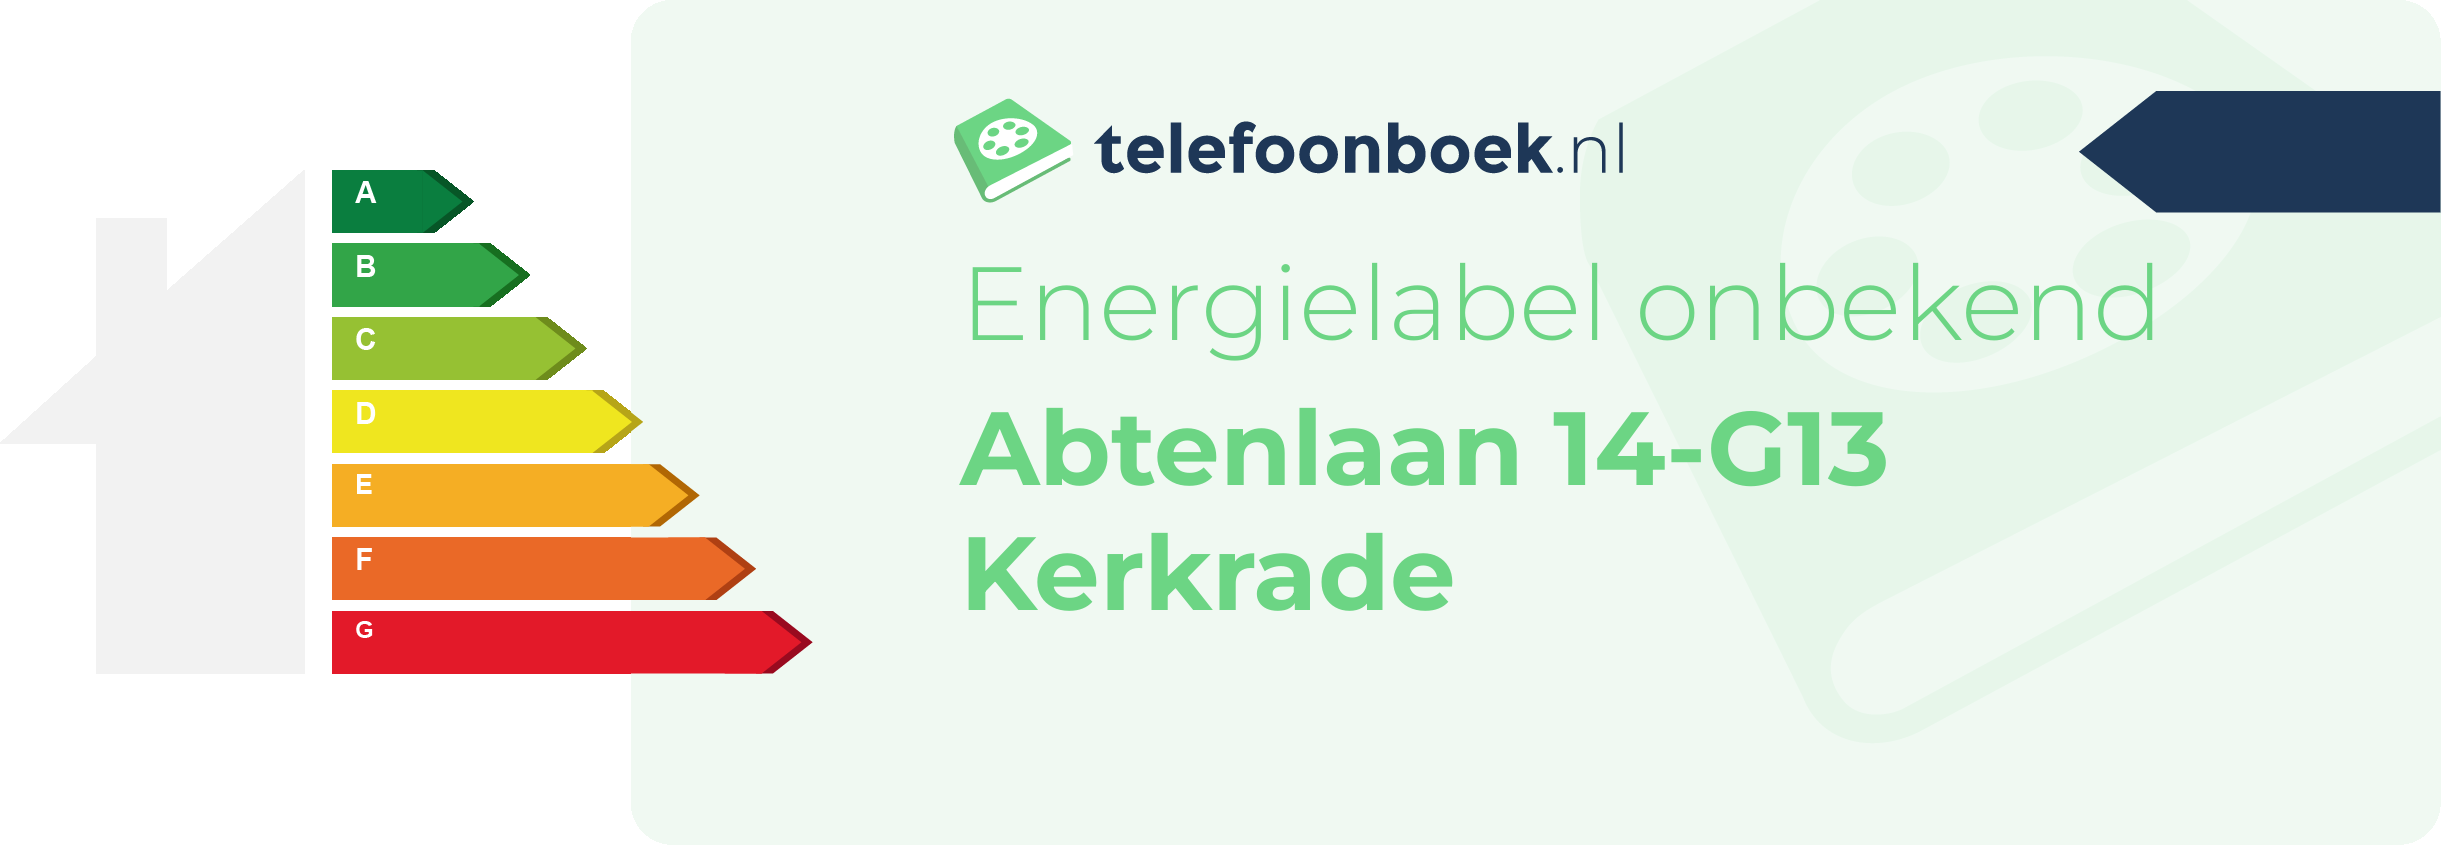 Energielabel Abtenlaan 14-G13 Kerkrade